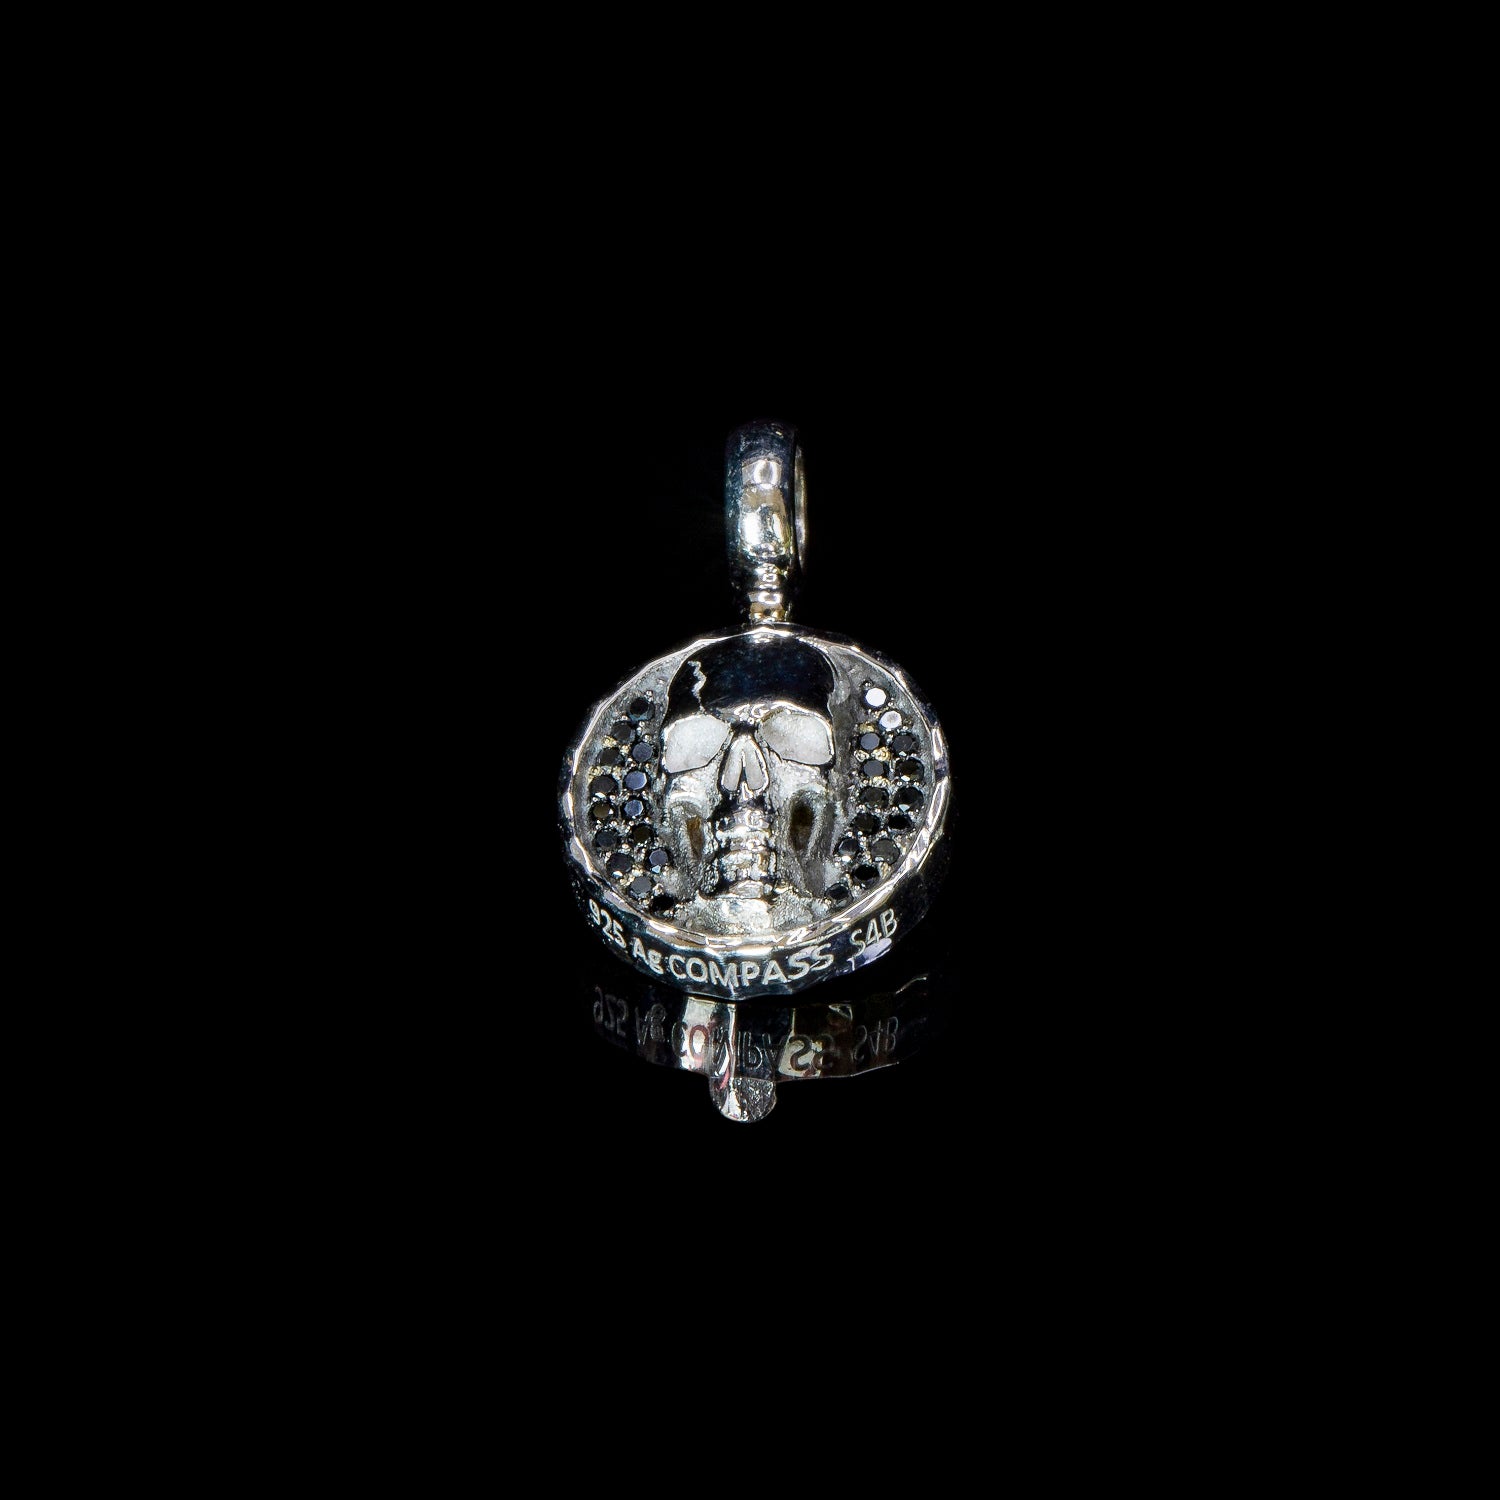 compass-jewelry-necklace-silver-skull-black-diamonds-1